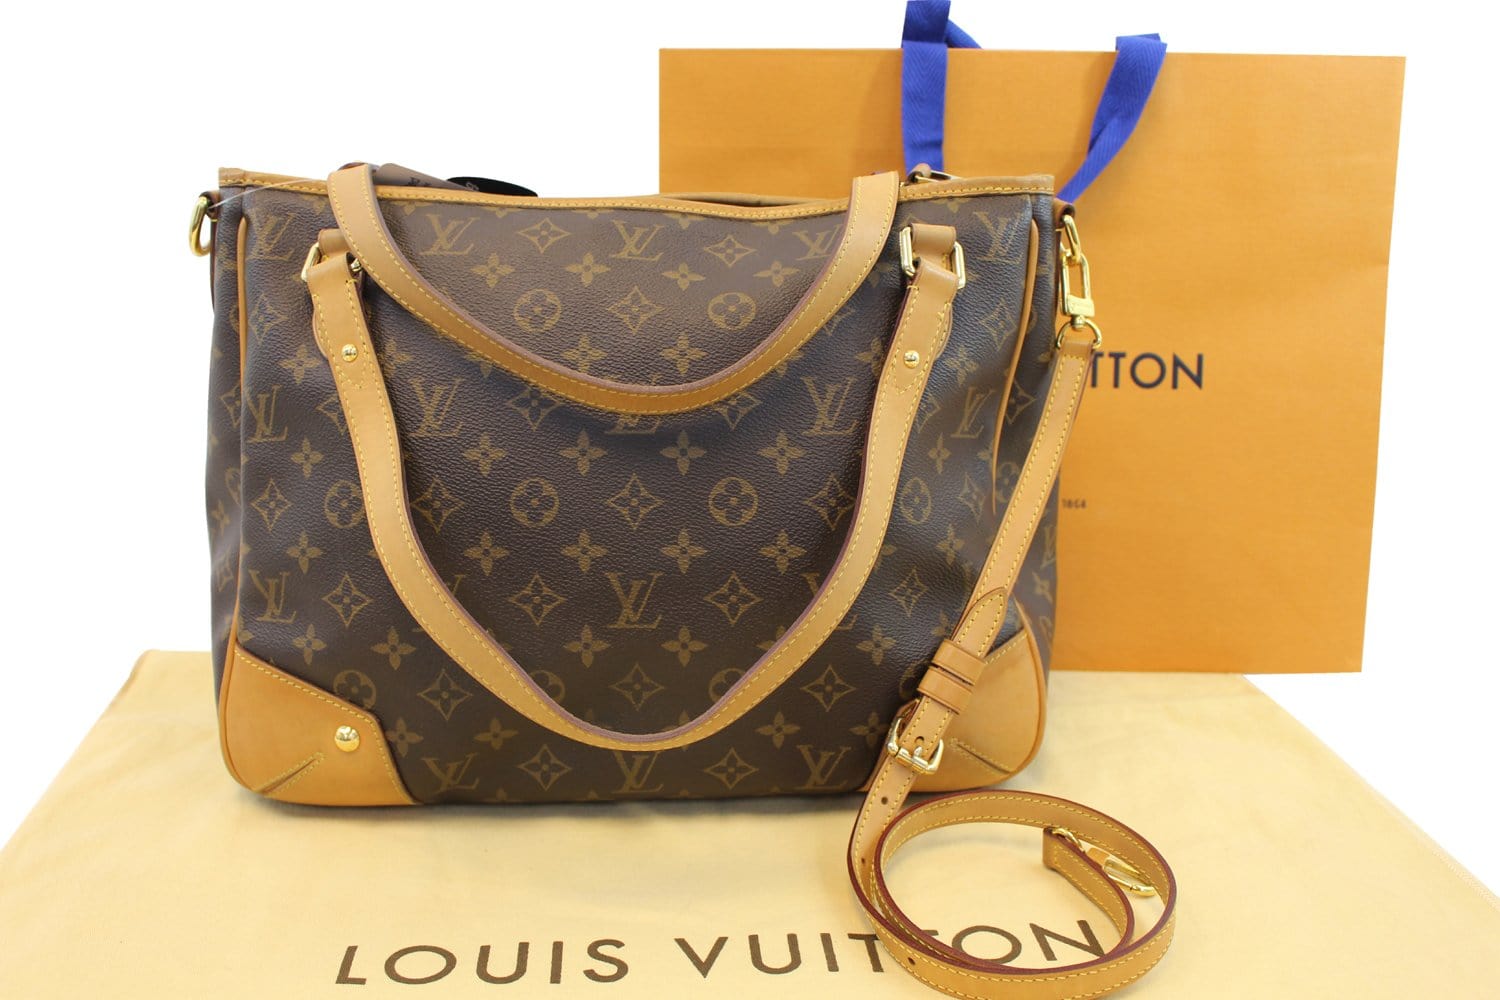 Buy Louis vuitton bag on authlv.com: 七月 2011